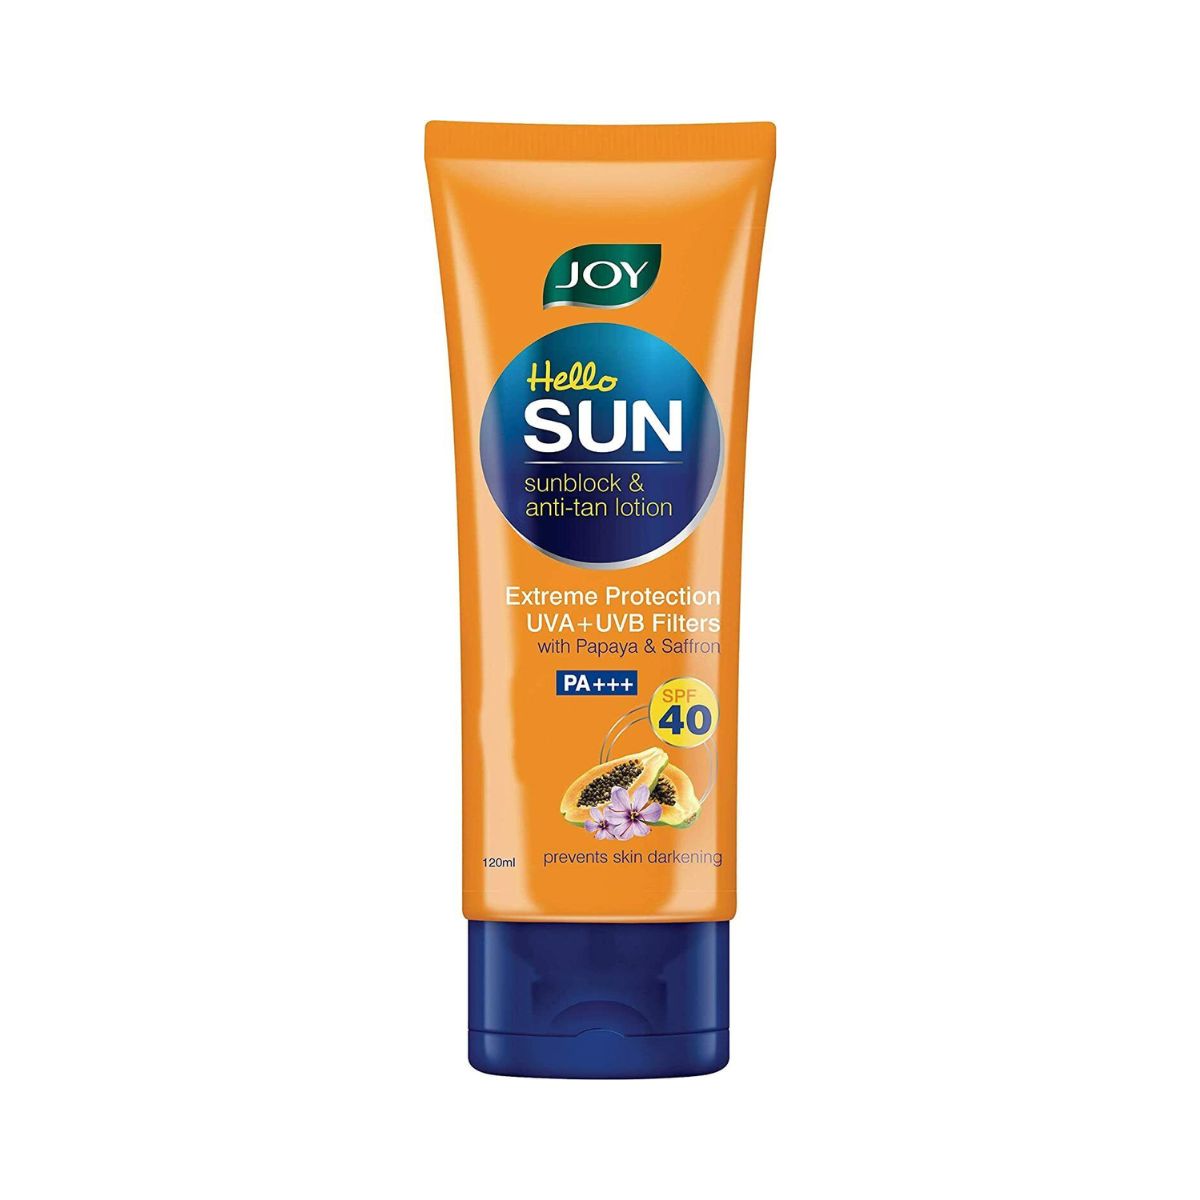 Joy Hello Sun - Sunblock & Anti-tan Lotion - Extrema Protection UVA+UVB Filters With Papaya & Saffron PA+++ - SPF 40 - 60ml